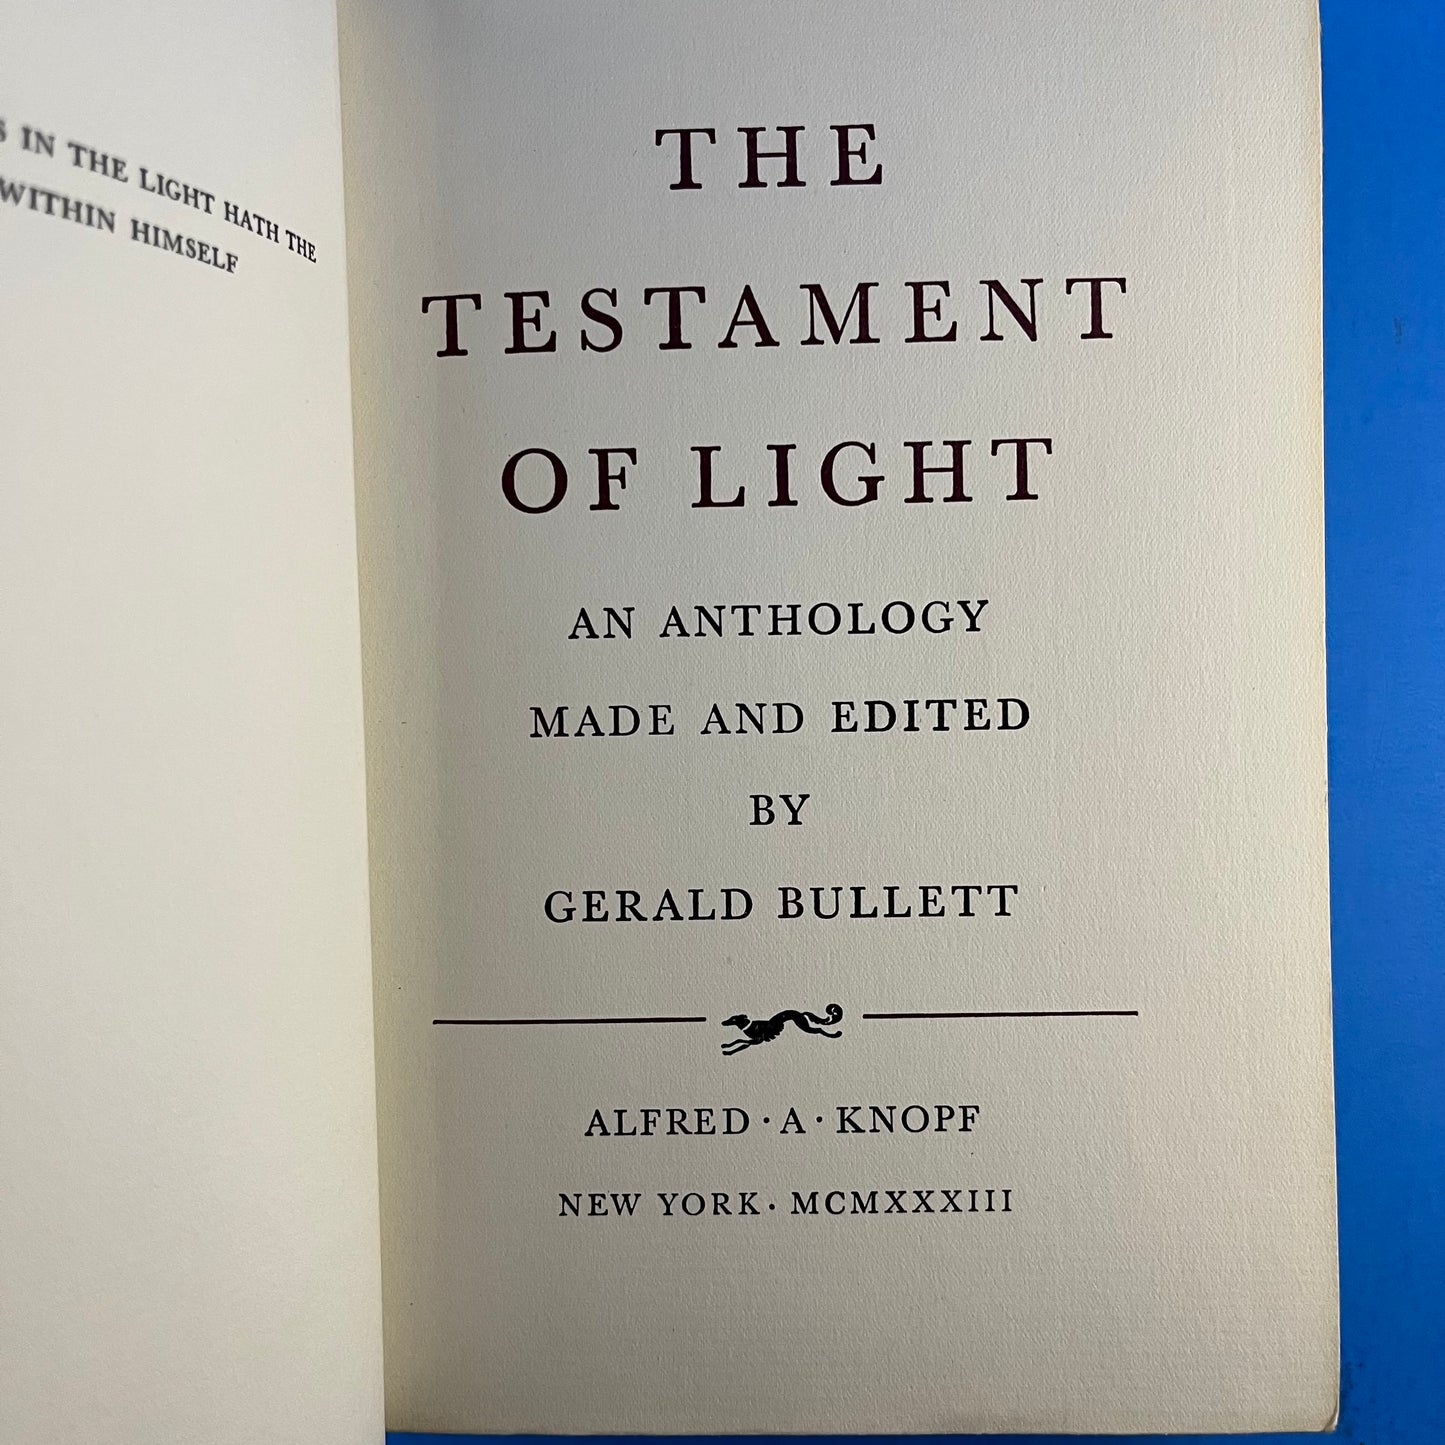 The Testament of Light